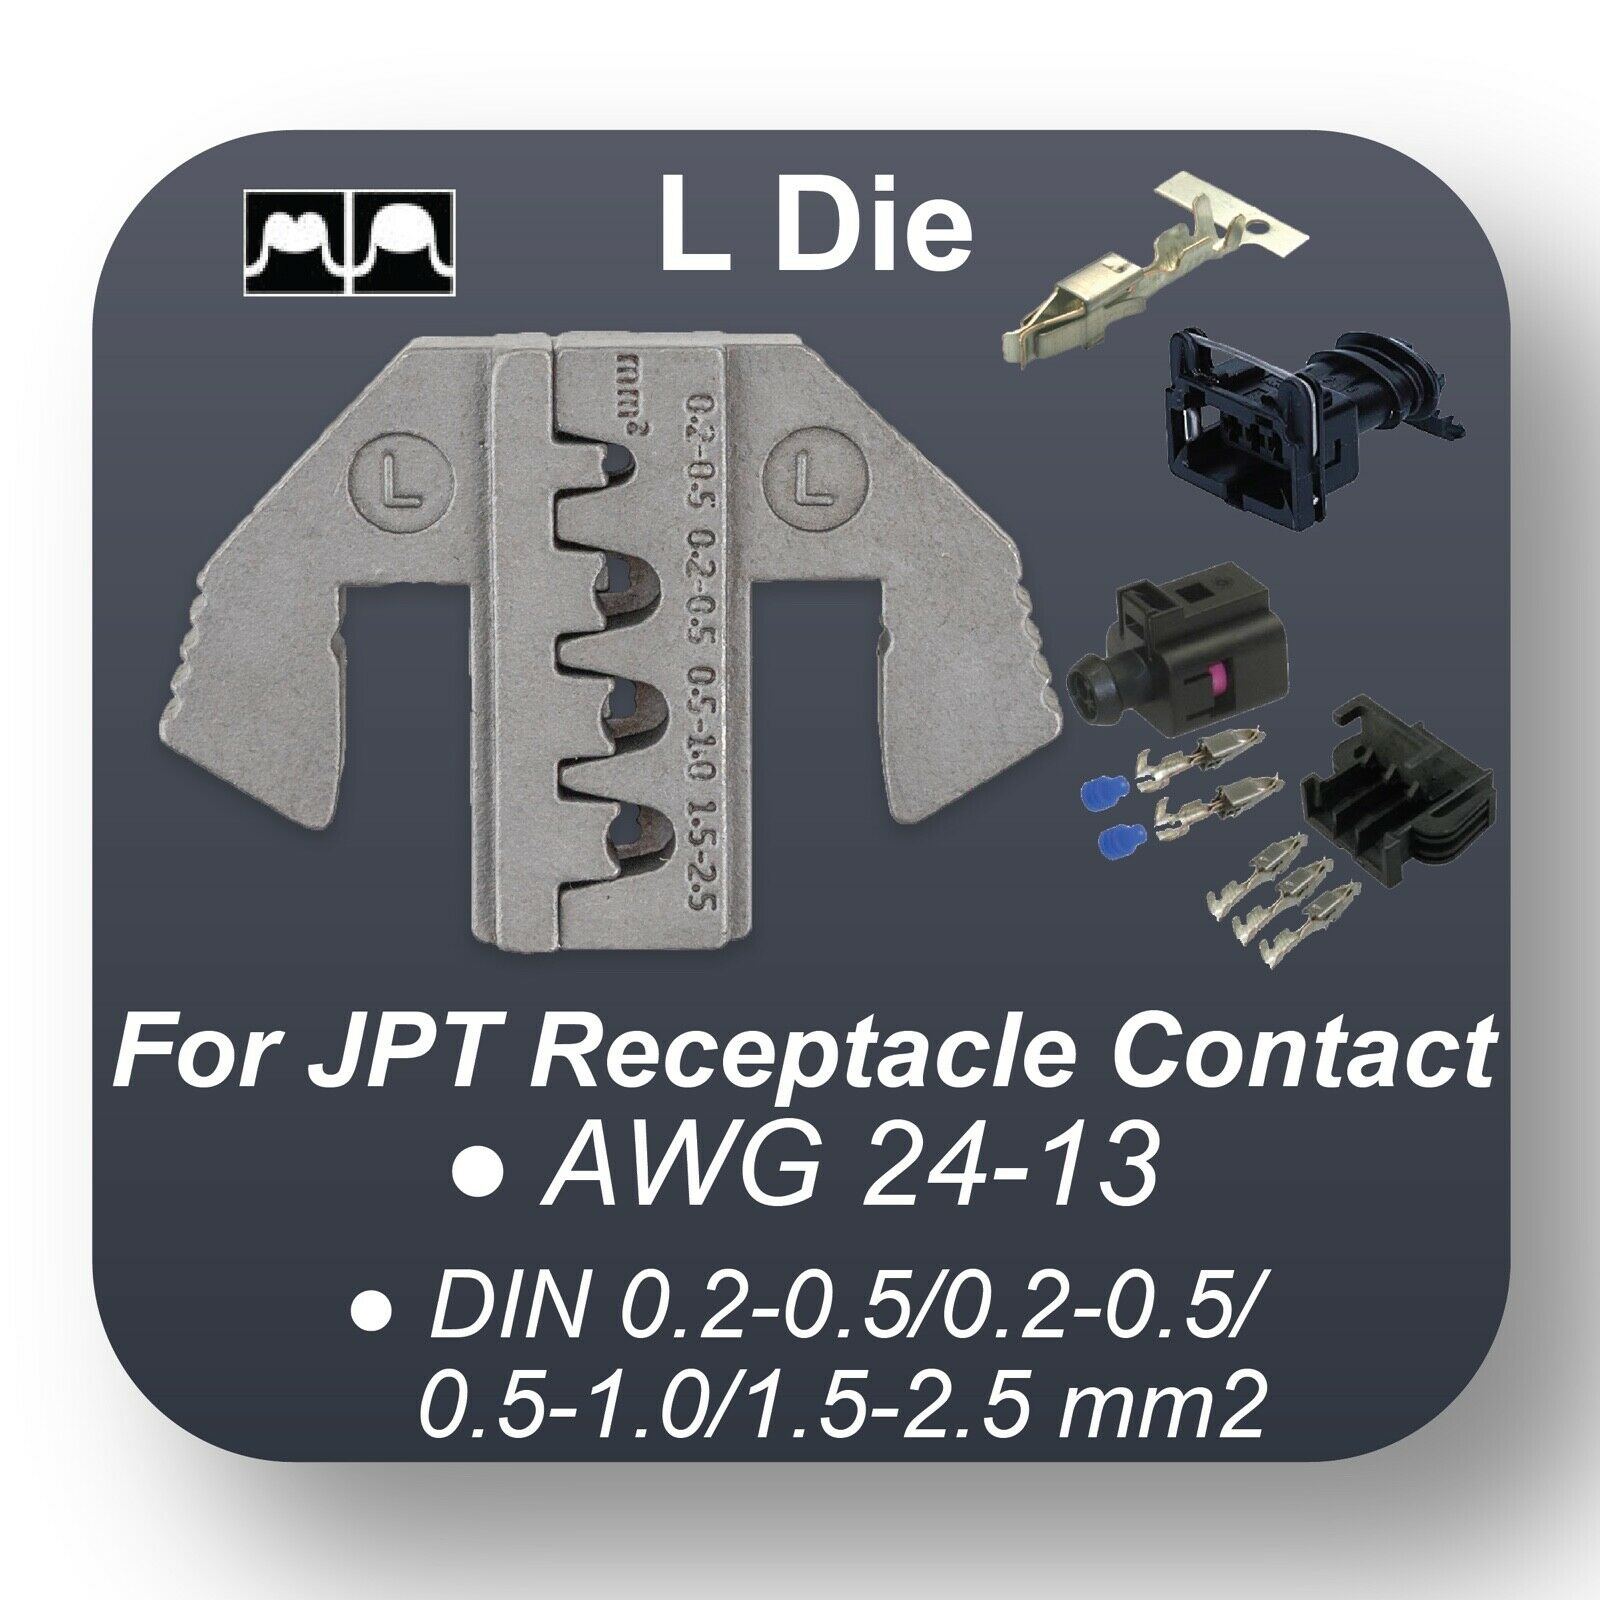 Crimping Tool Die - L Die for TE JPT Receptacle Contact Terminals AWG 24-13 - Tool Guy Republic